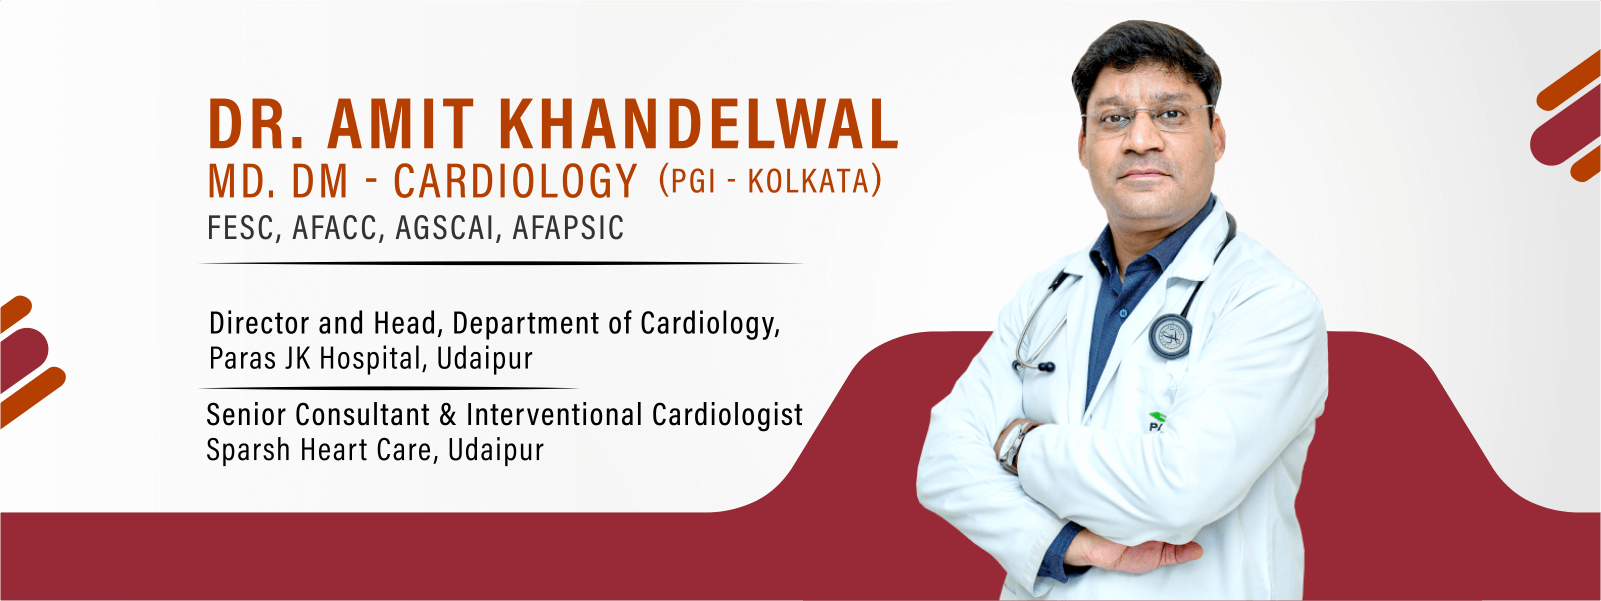 dr amit khandelwal, cardiologist in udaipur, best cardiologist in udaipur